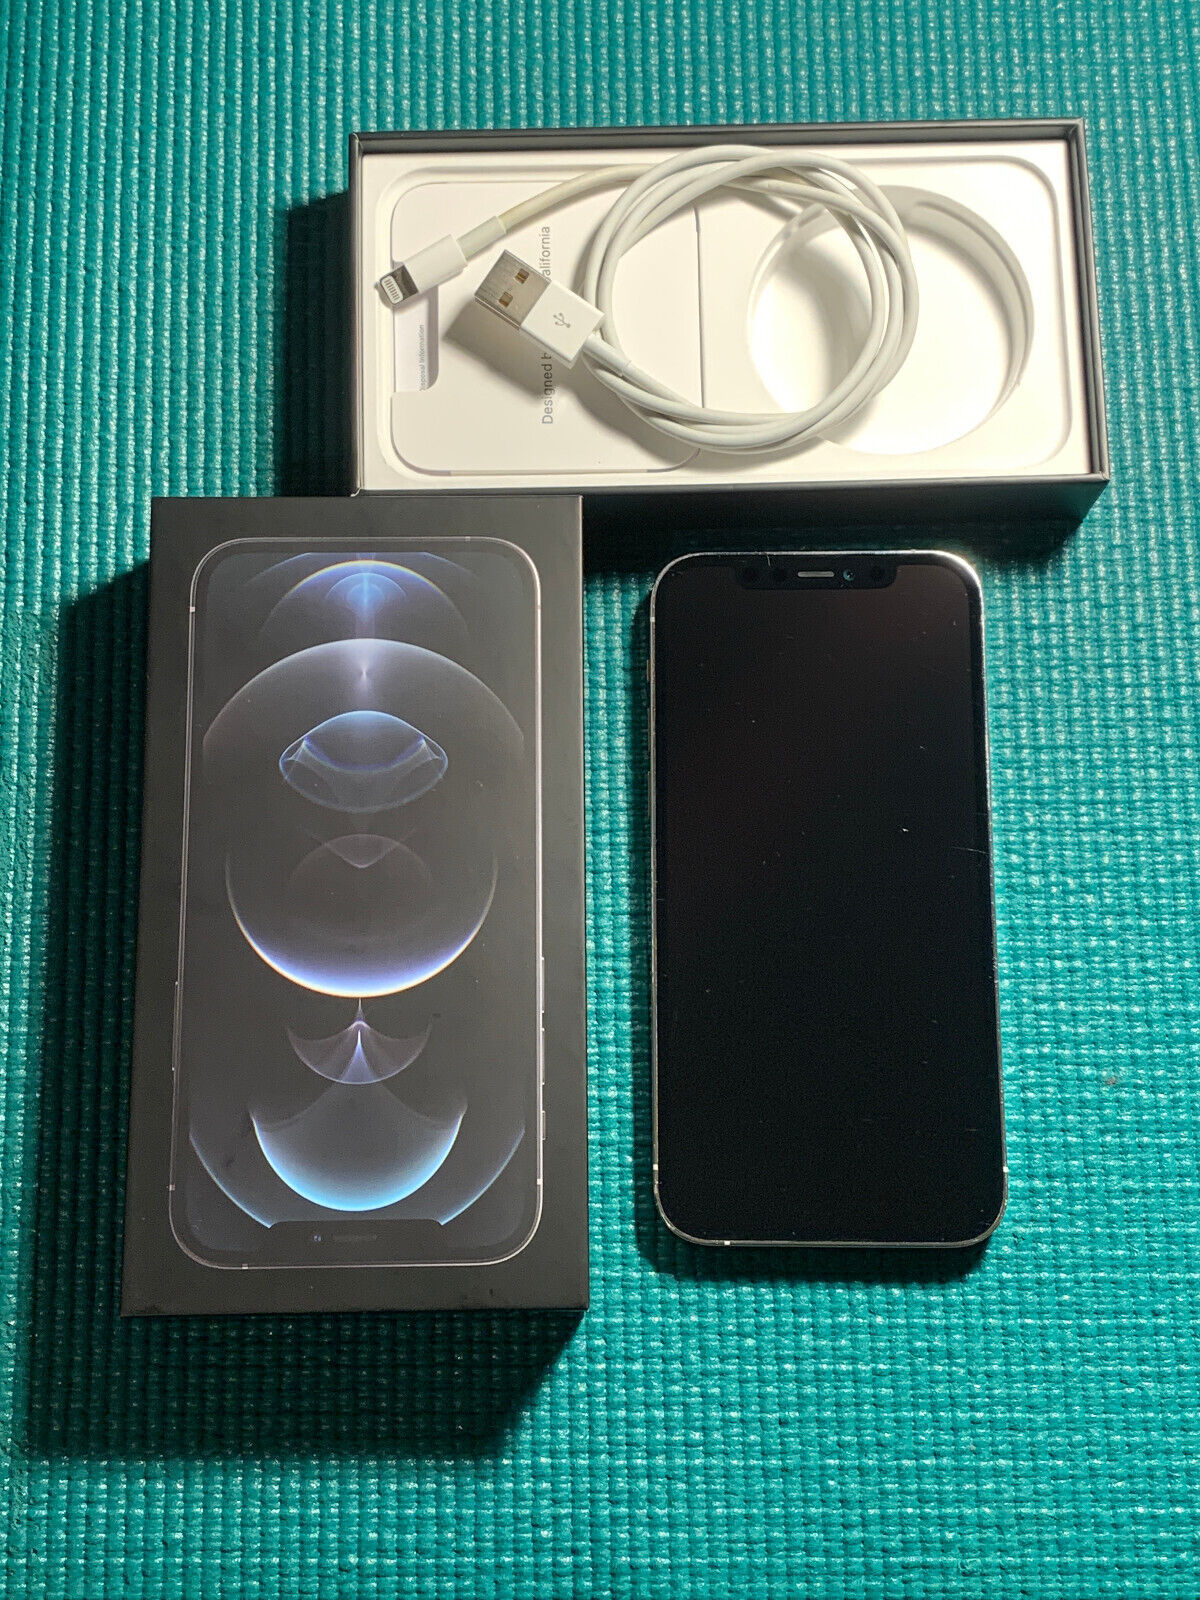 Apple iPhone 12 Pro - 256GB - Silver (Unlocked) A2341 (CDMA + GSM) - $445.50